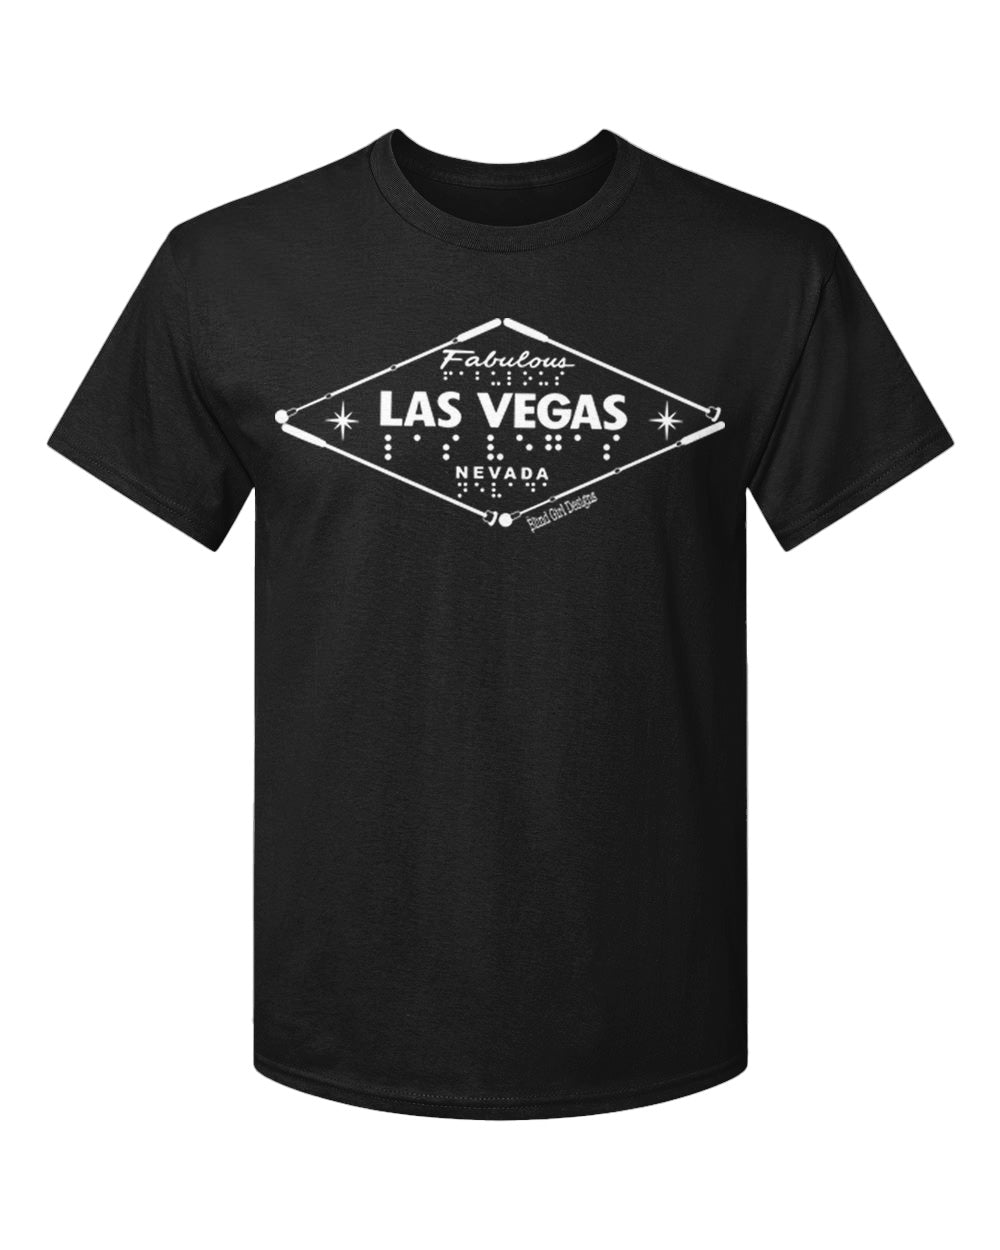 SALE! Fabulous Las Vegas White Cane Crew  T shirt  Black